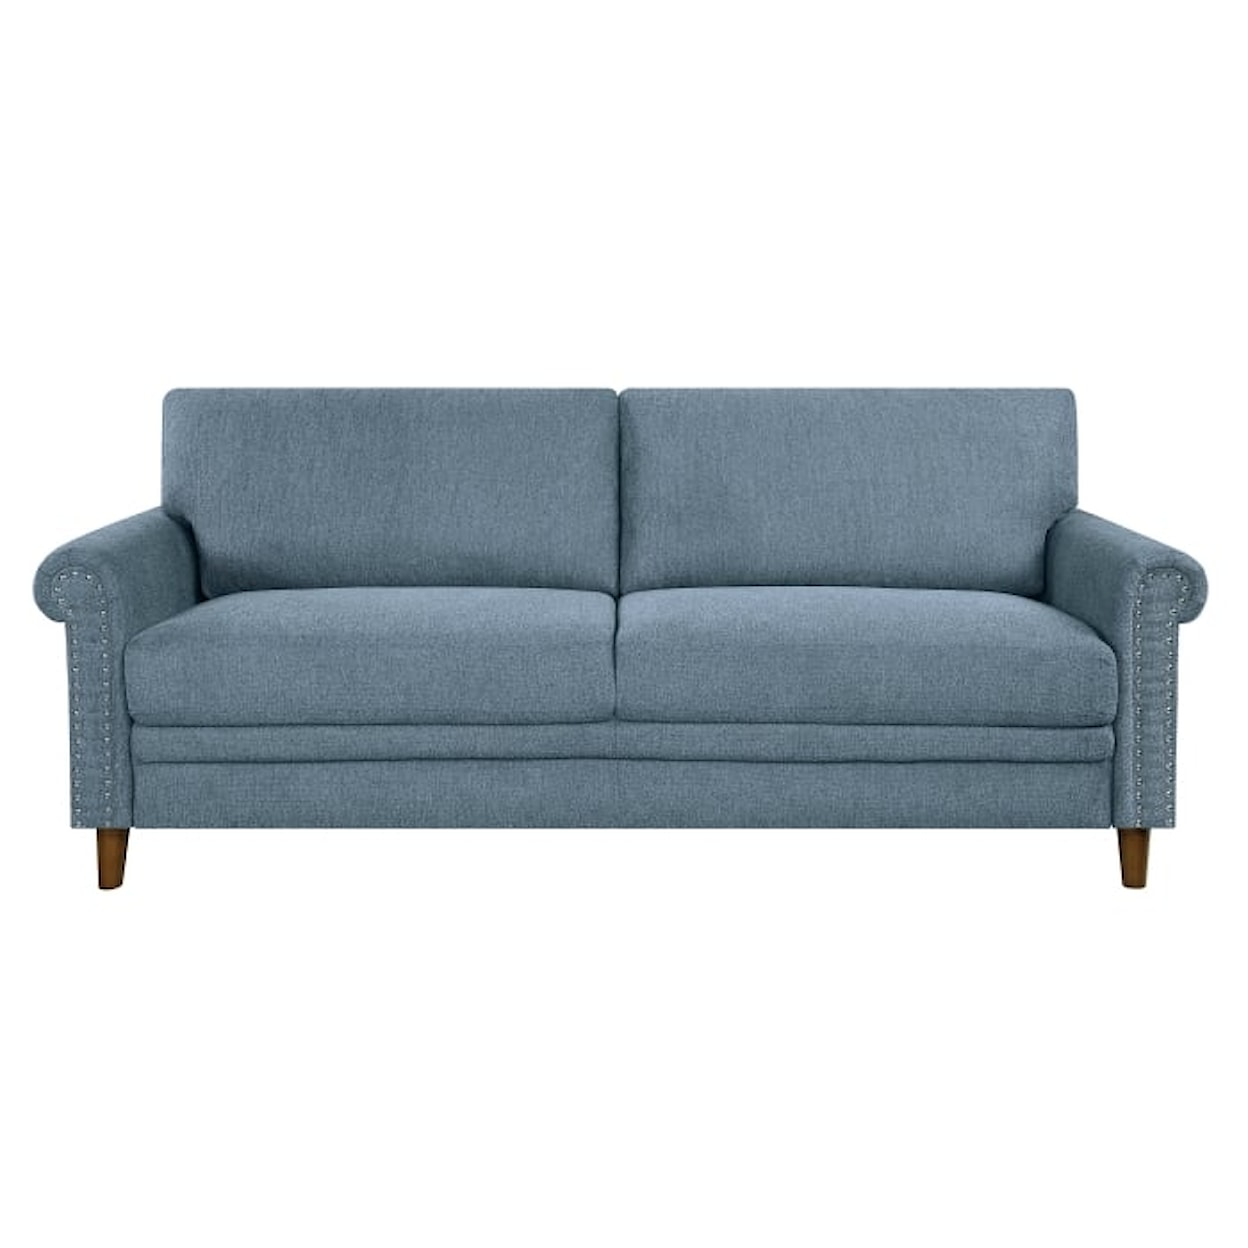 Homelegance Furniture Kinsale Sofa